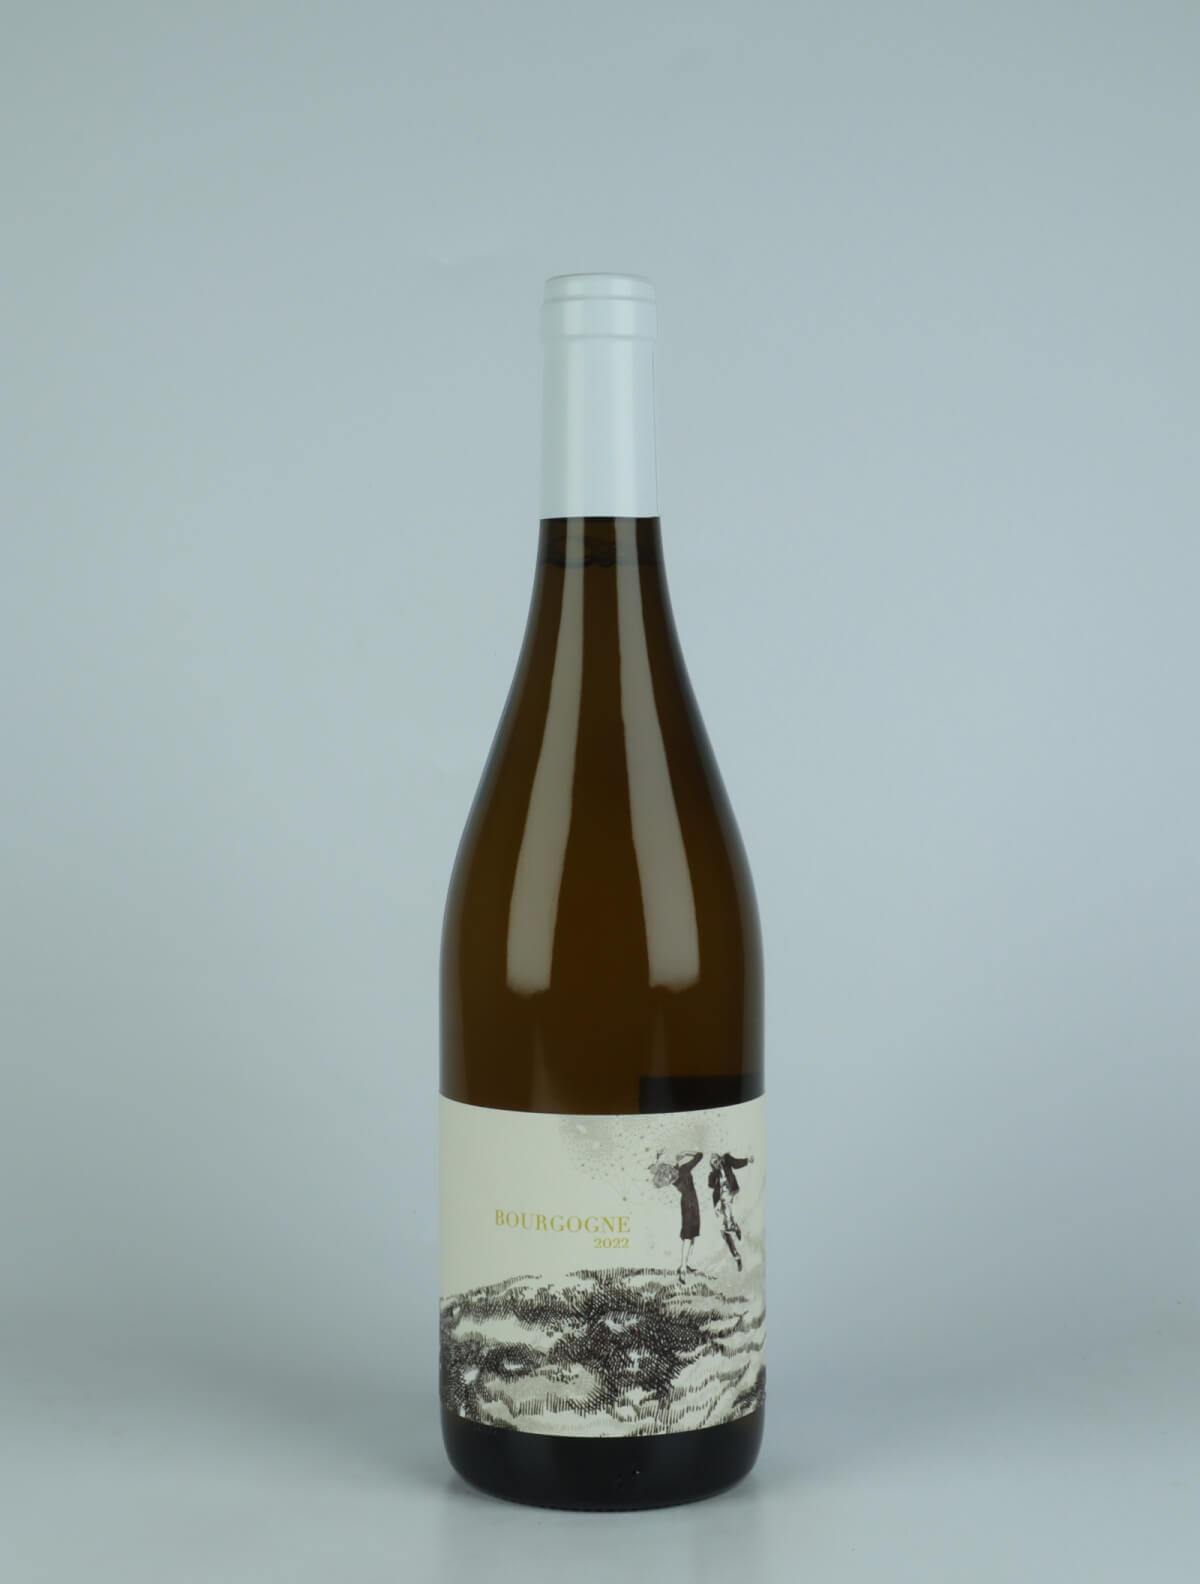 A bottle 2022 Bourgogne Blanc White wine from Domaine Didon, Burgundy in France